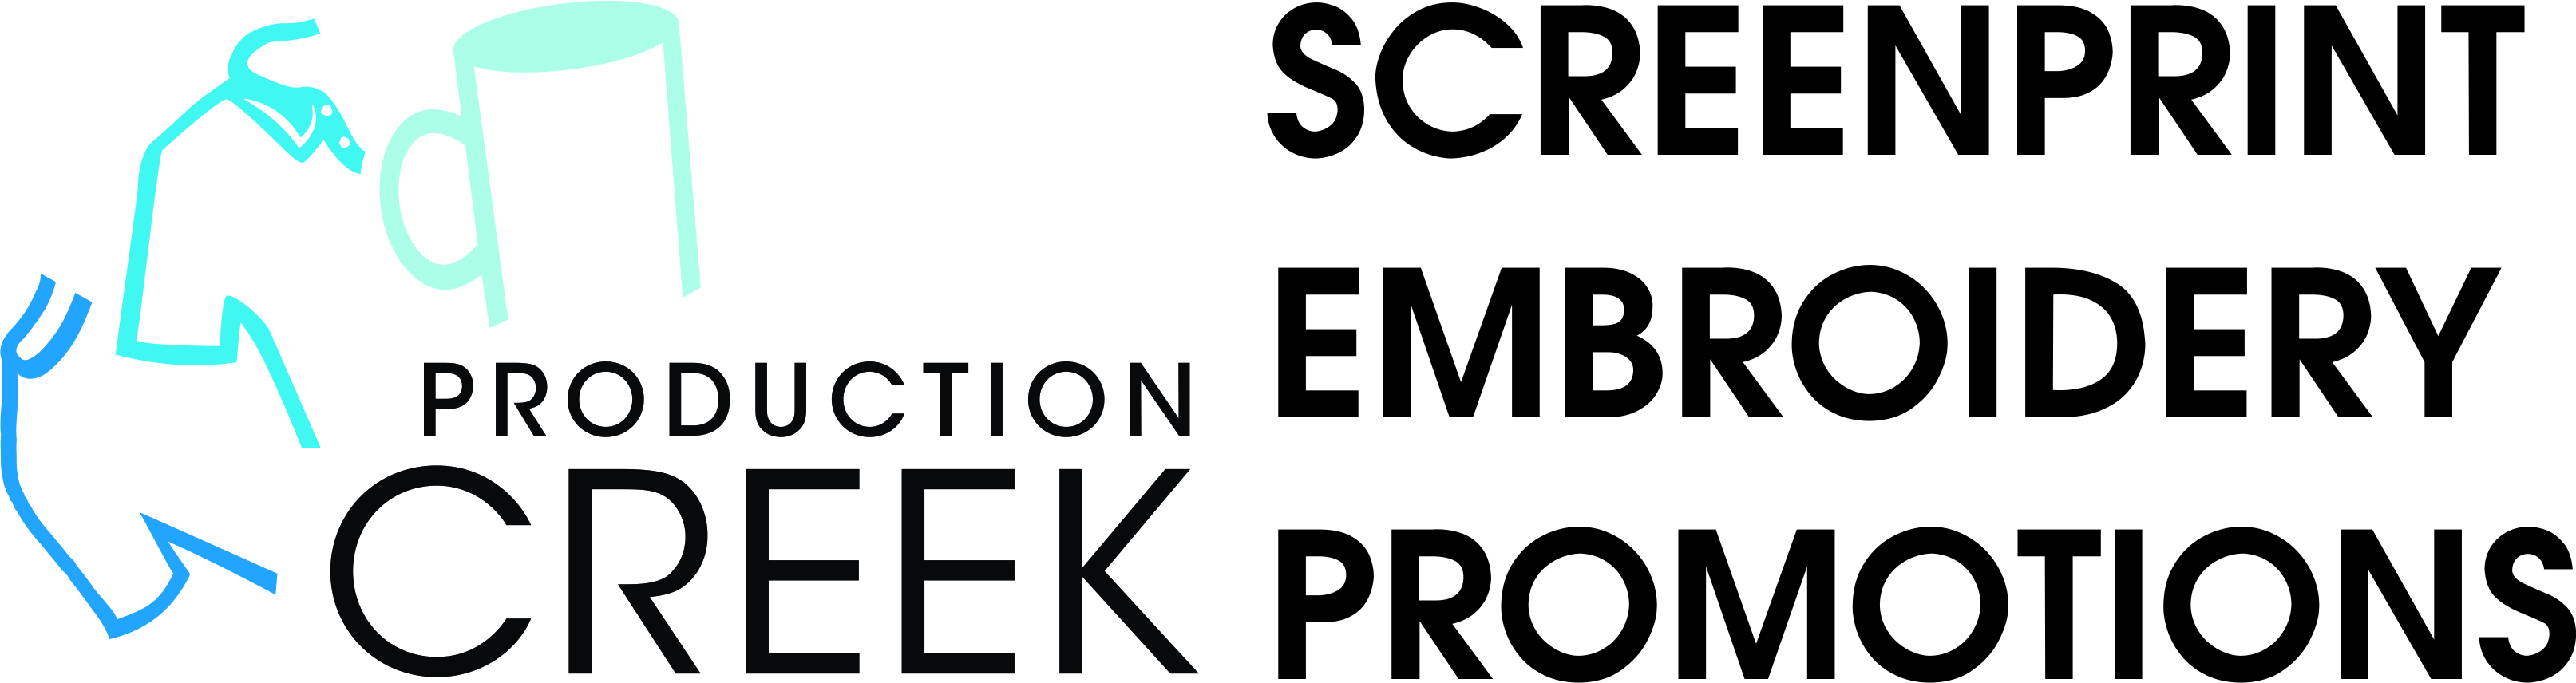 Production Creek LLC's Logo